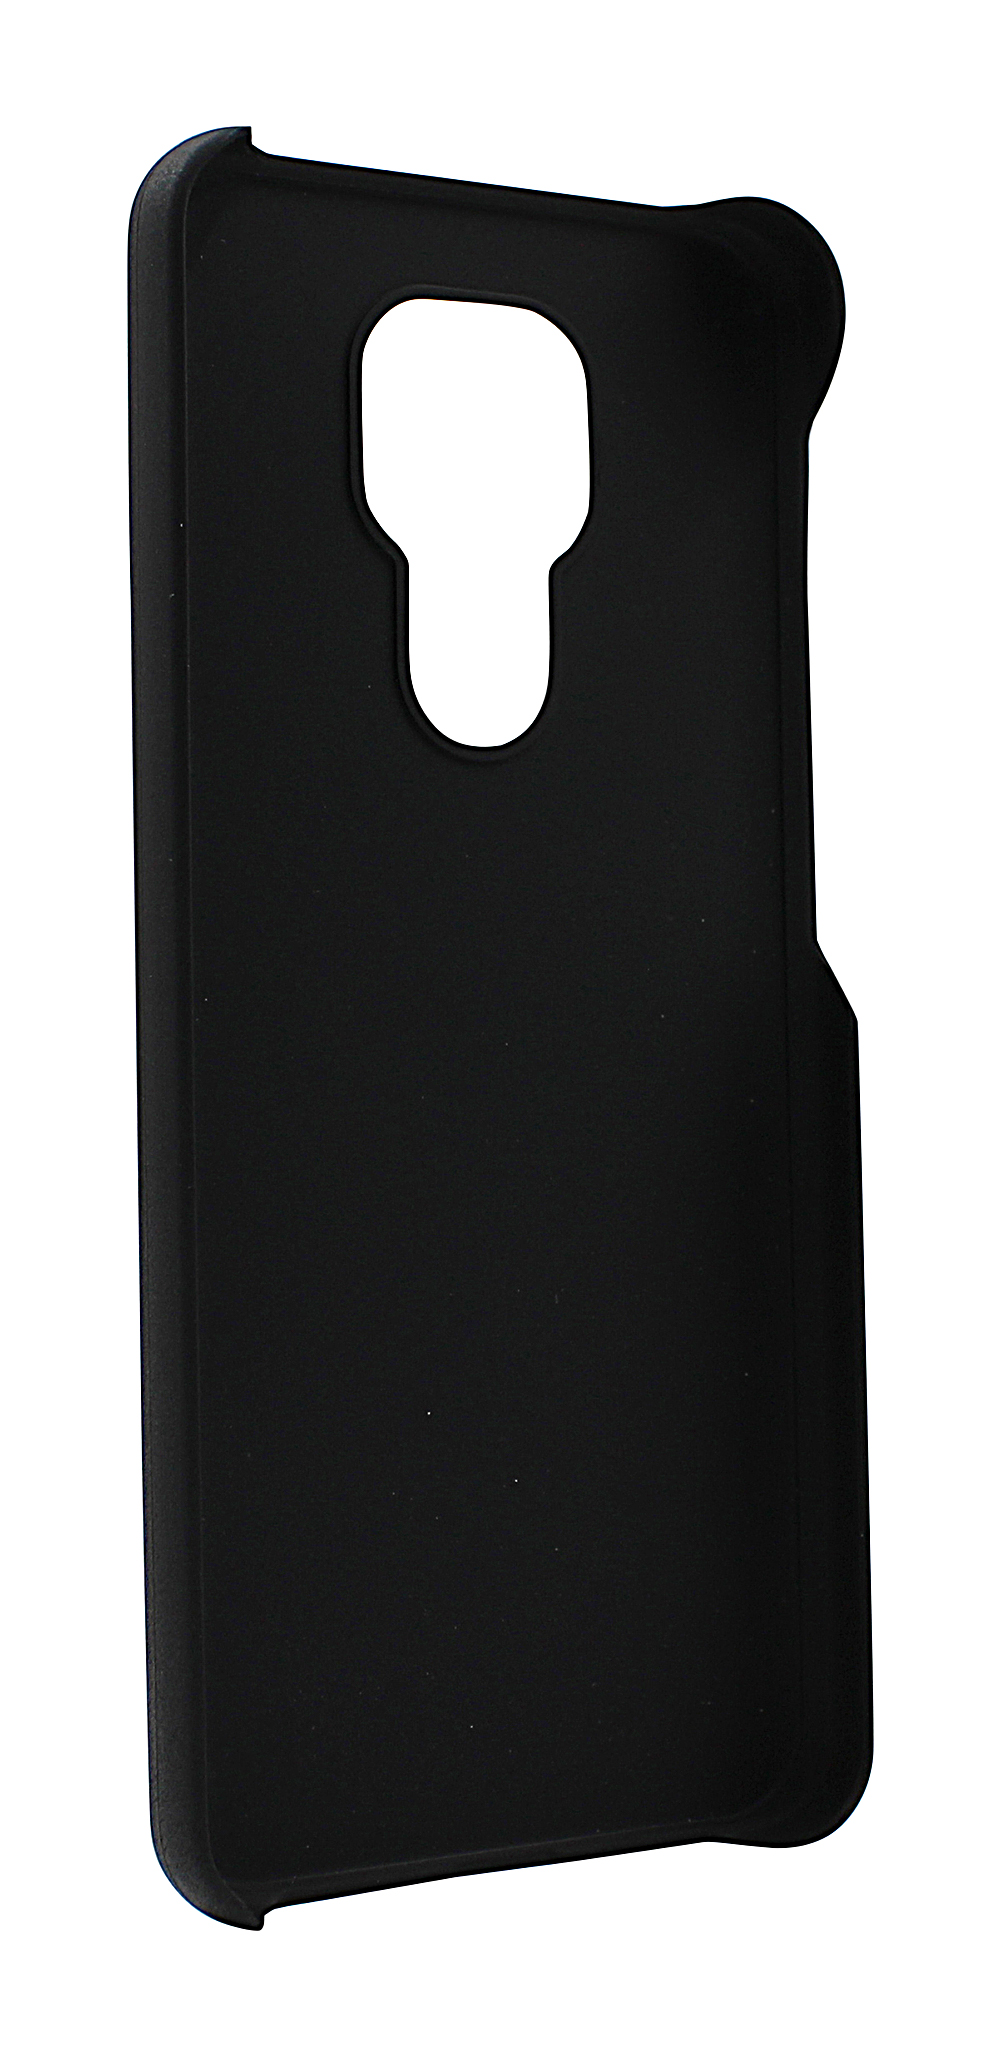 CoverInSkimblocker XL Magnet Fodral Motorola Moto G9 Play